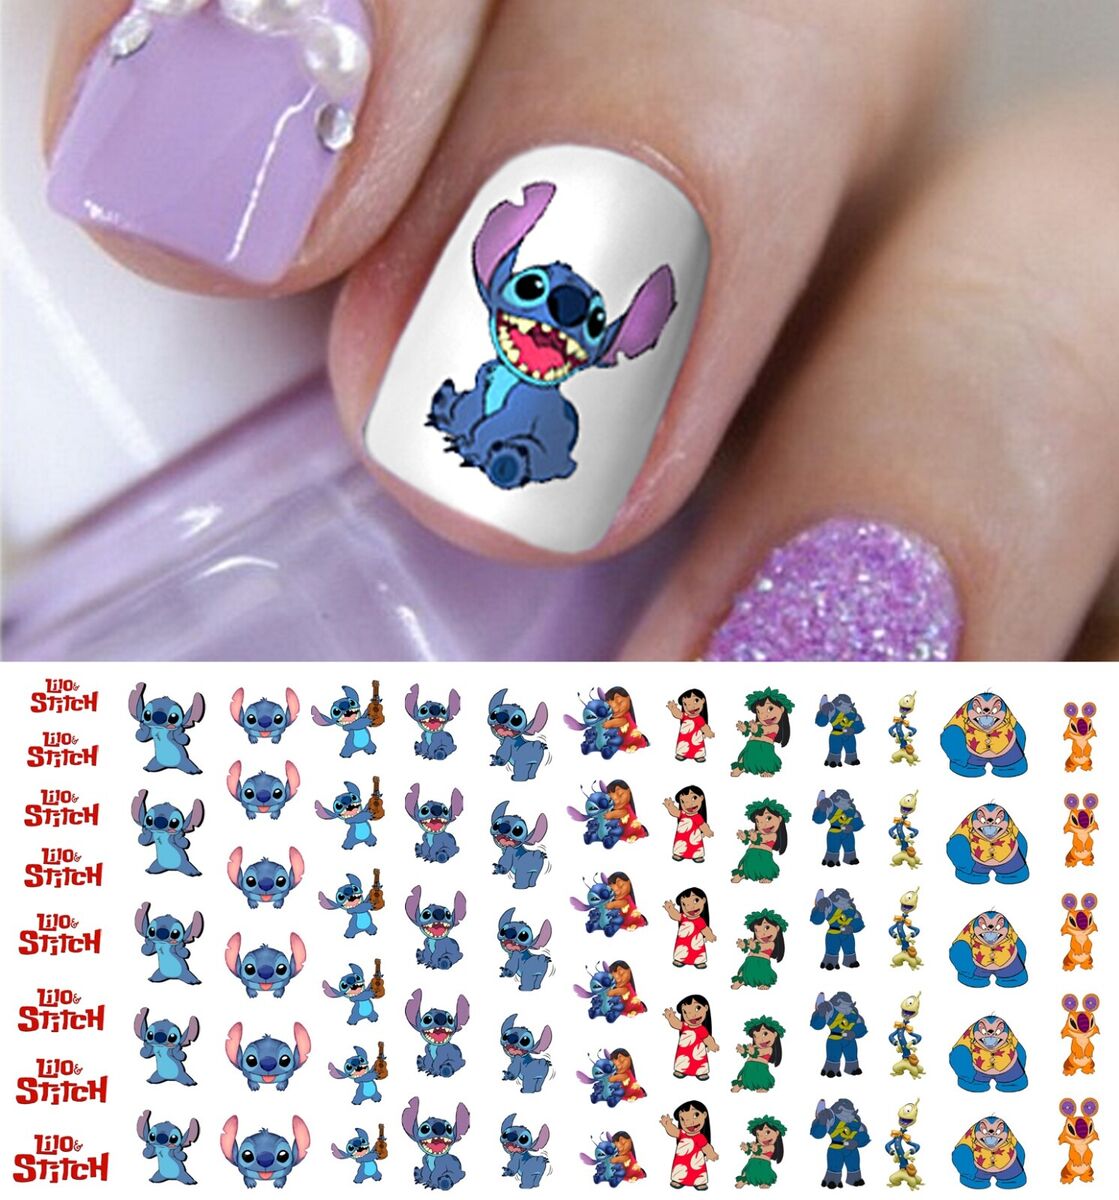 Lilo & Stitch Nail Art Decals - Salon Quality! Disney